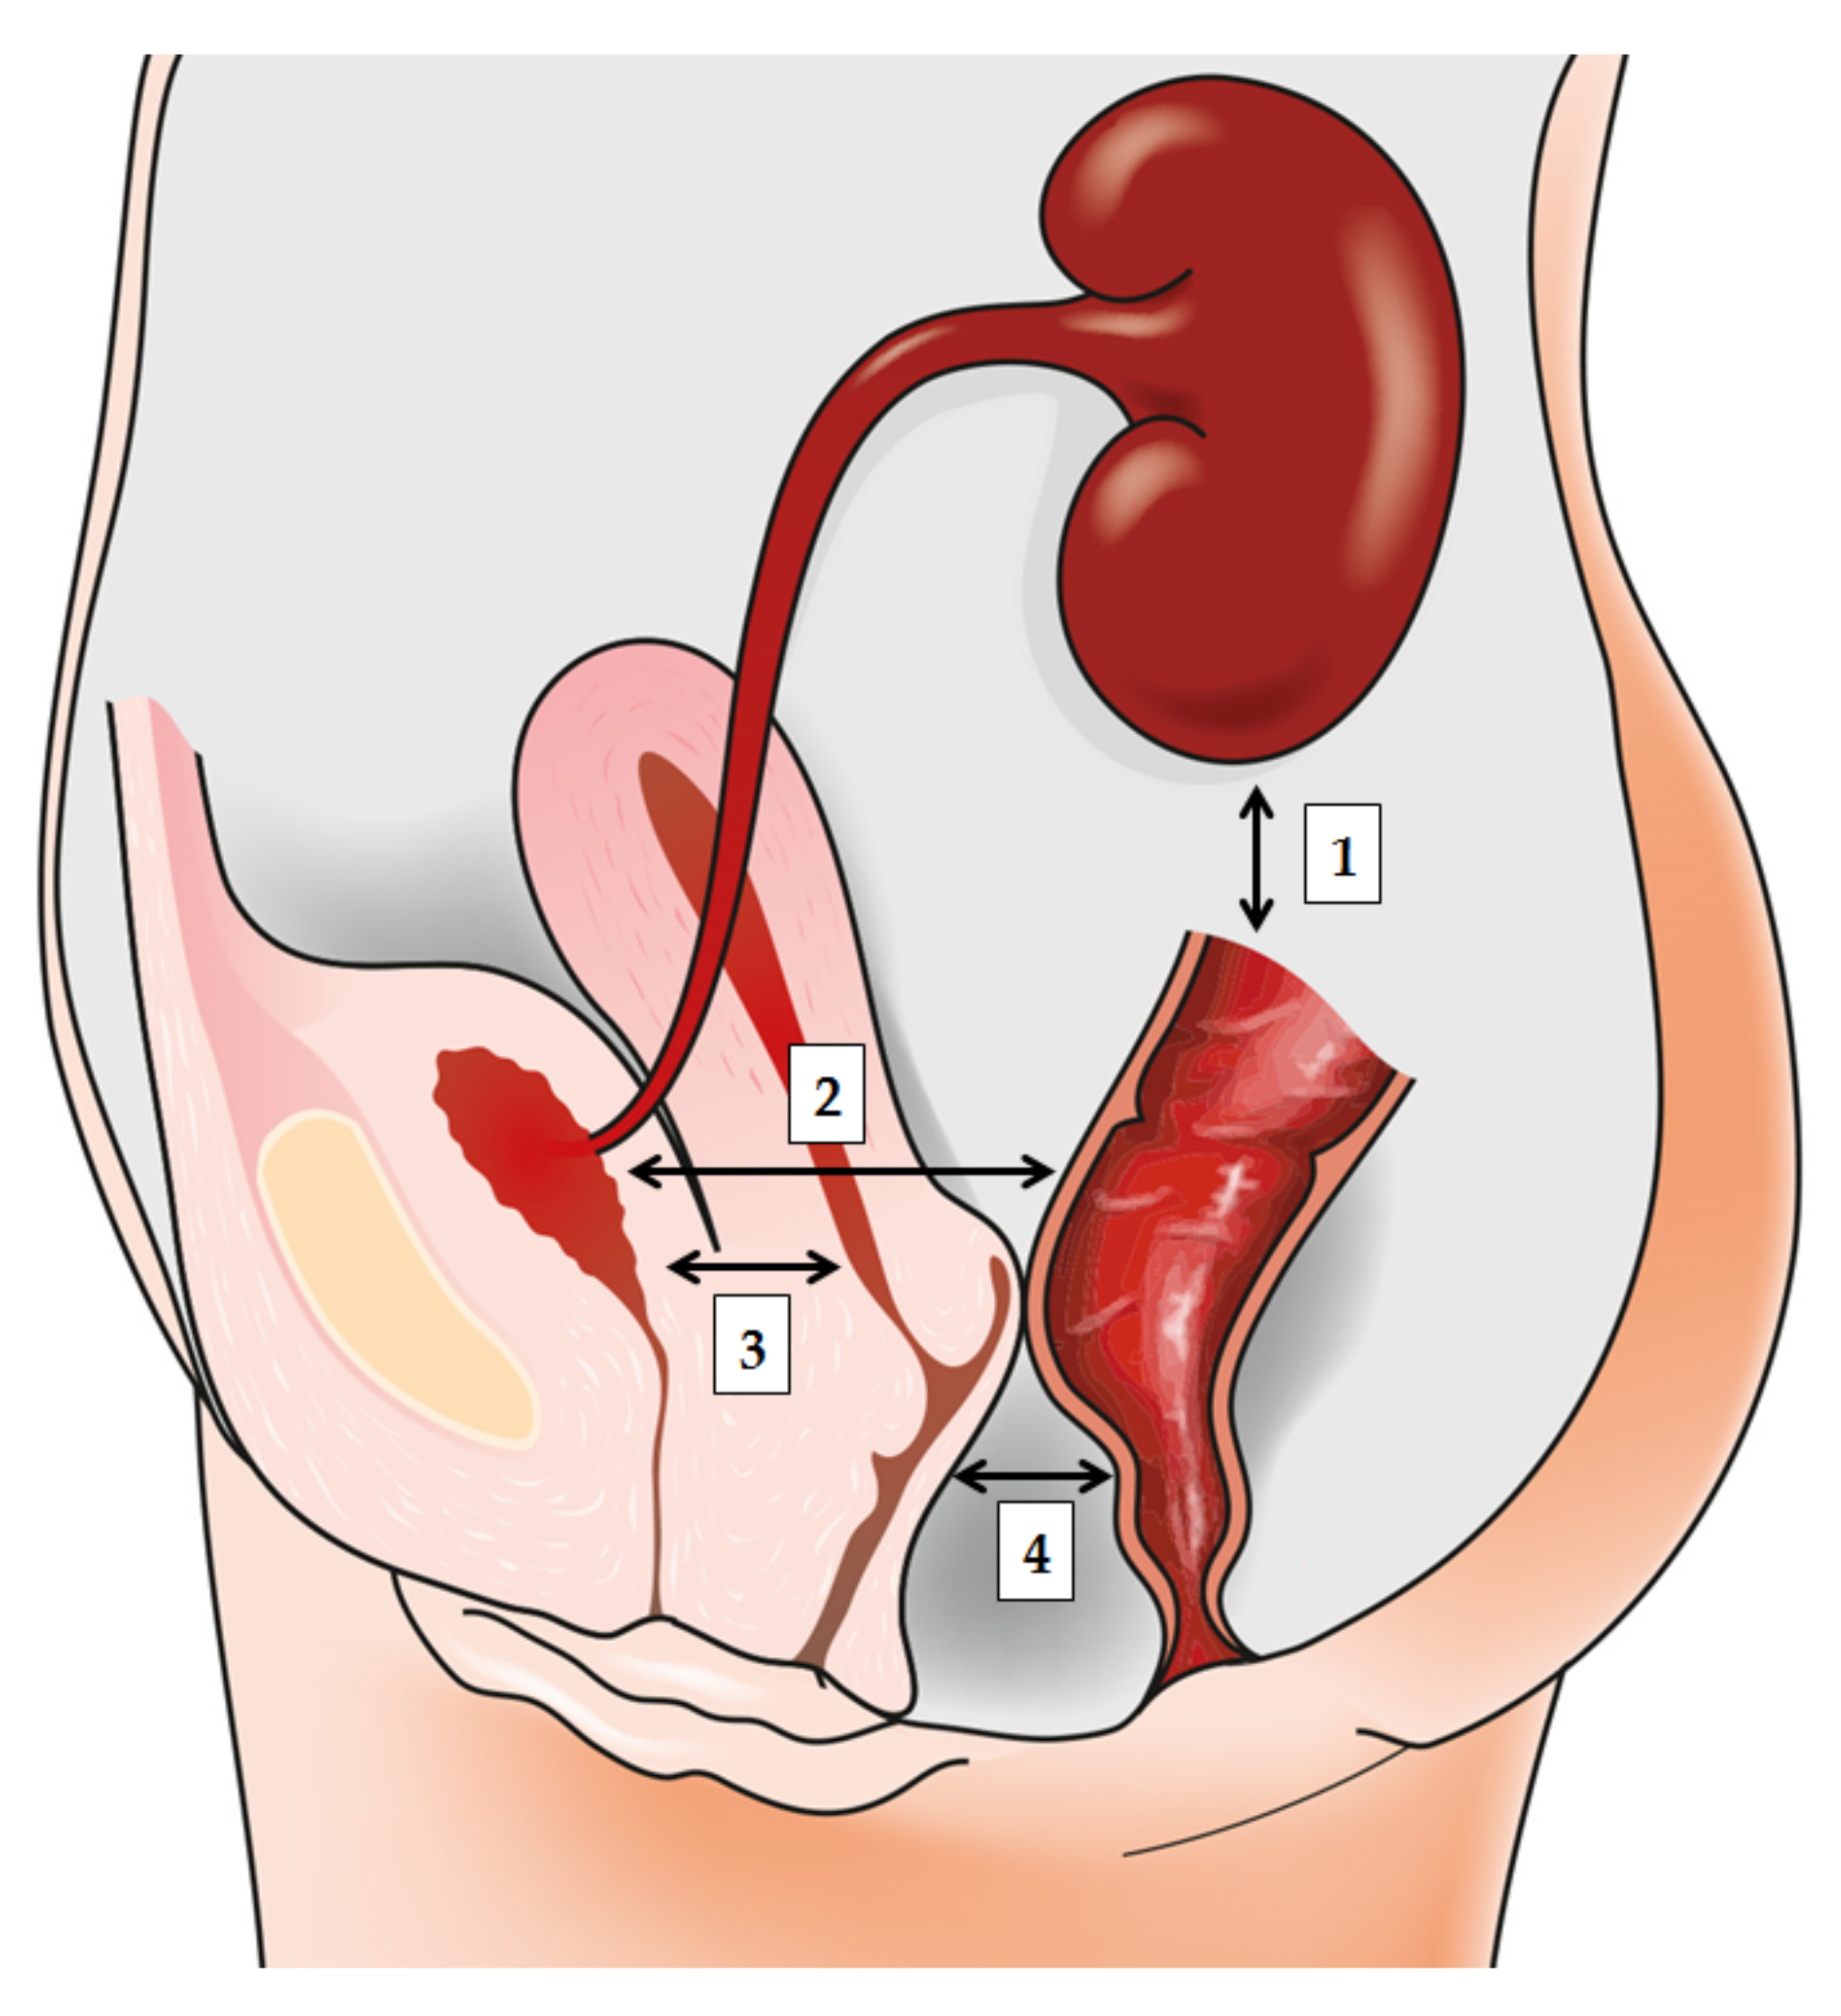 ecografia transrectal prostatica preparacion preparación para examen de próstata en sangre